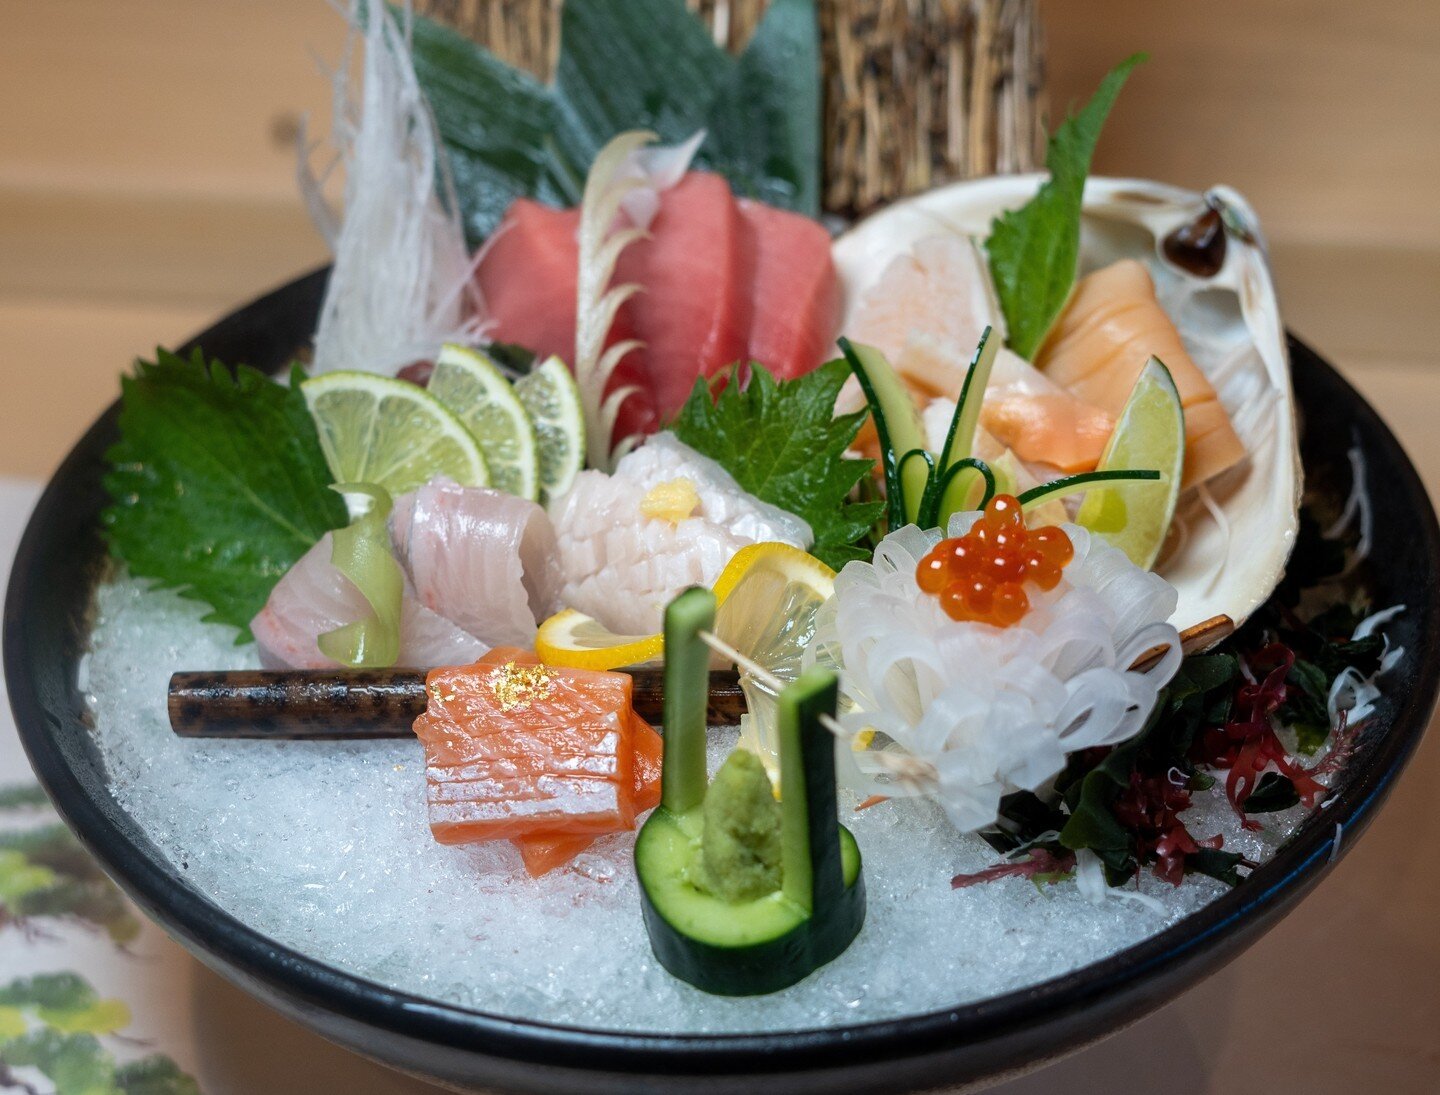 Sashimi dreams on a plate &ndash; pure elegance in every slice! Book your table! #UmamiJourney 🍣✨ 

◾️◽️◾️◽️◾️◽️◾️◽️◾️◽️ 
🍣 𝐊𝐀𝐁𝐔𝐓𝐎 - 𝐄𝐃𝐎𝐌𝐀𝐄 𝐒𝐔𝐒𝐇𝐈 
⏰ ᴅᴀɪʟʏ: 5:30 ᴘᴍ - 9:00 ᴘᴍ 
📍 5040 ꜱᴘʀɪɴɢ ᴍᴏᴜɴᴛᴀɪɴ ʀᴅ. ʟᴀꜱ ᴠᴇɢᴀꜱ 
🔔 ʀᴇꜱᴇʀᴠᴀᴛɪᴏɴ ᴏɴ